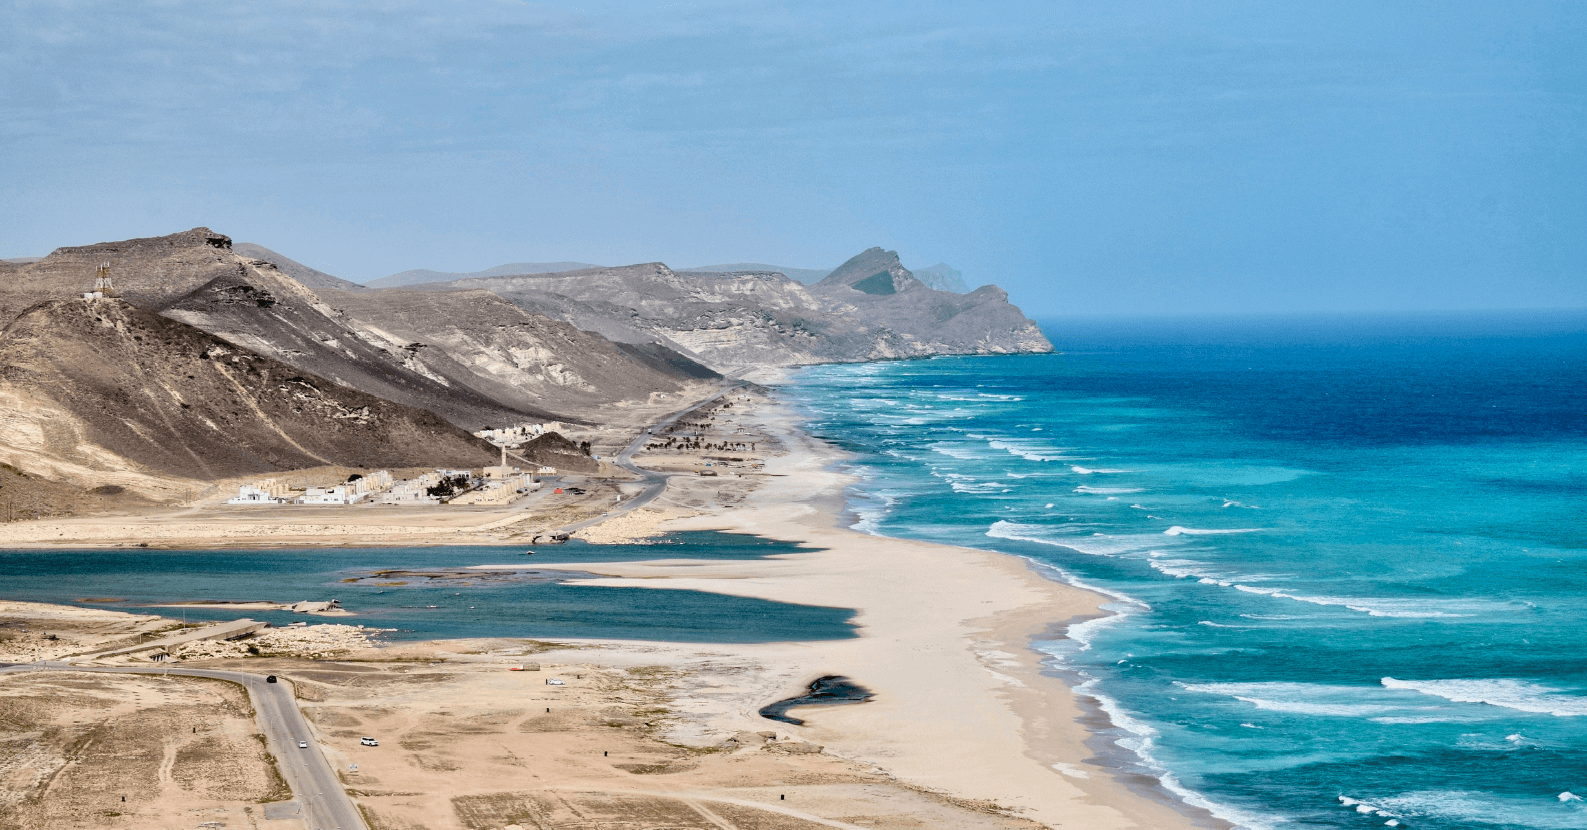 Rugged coastline and beach in Oman